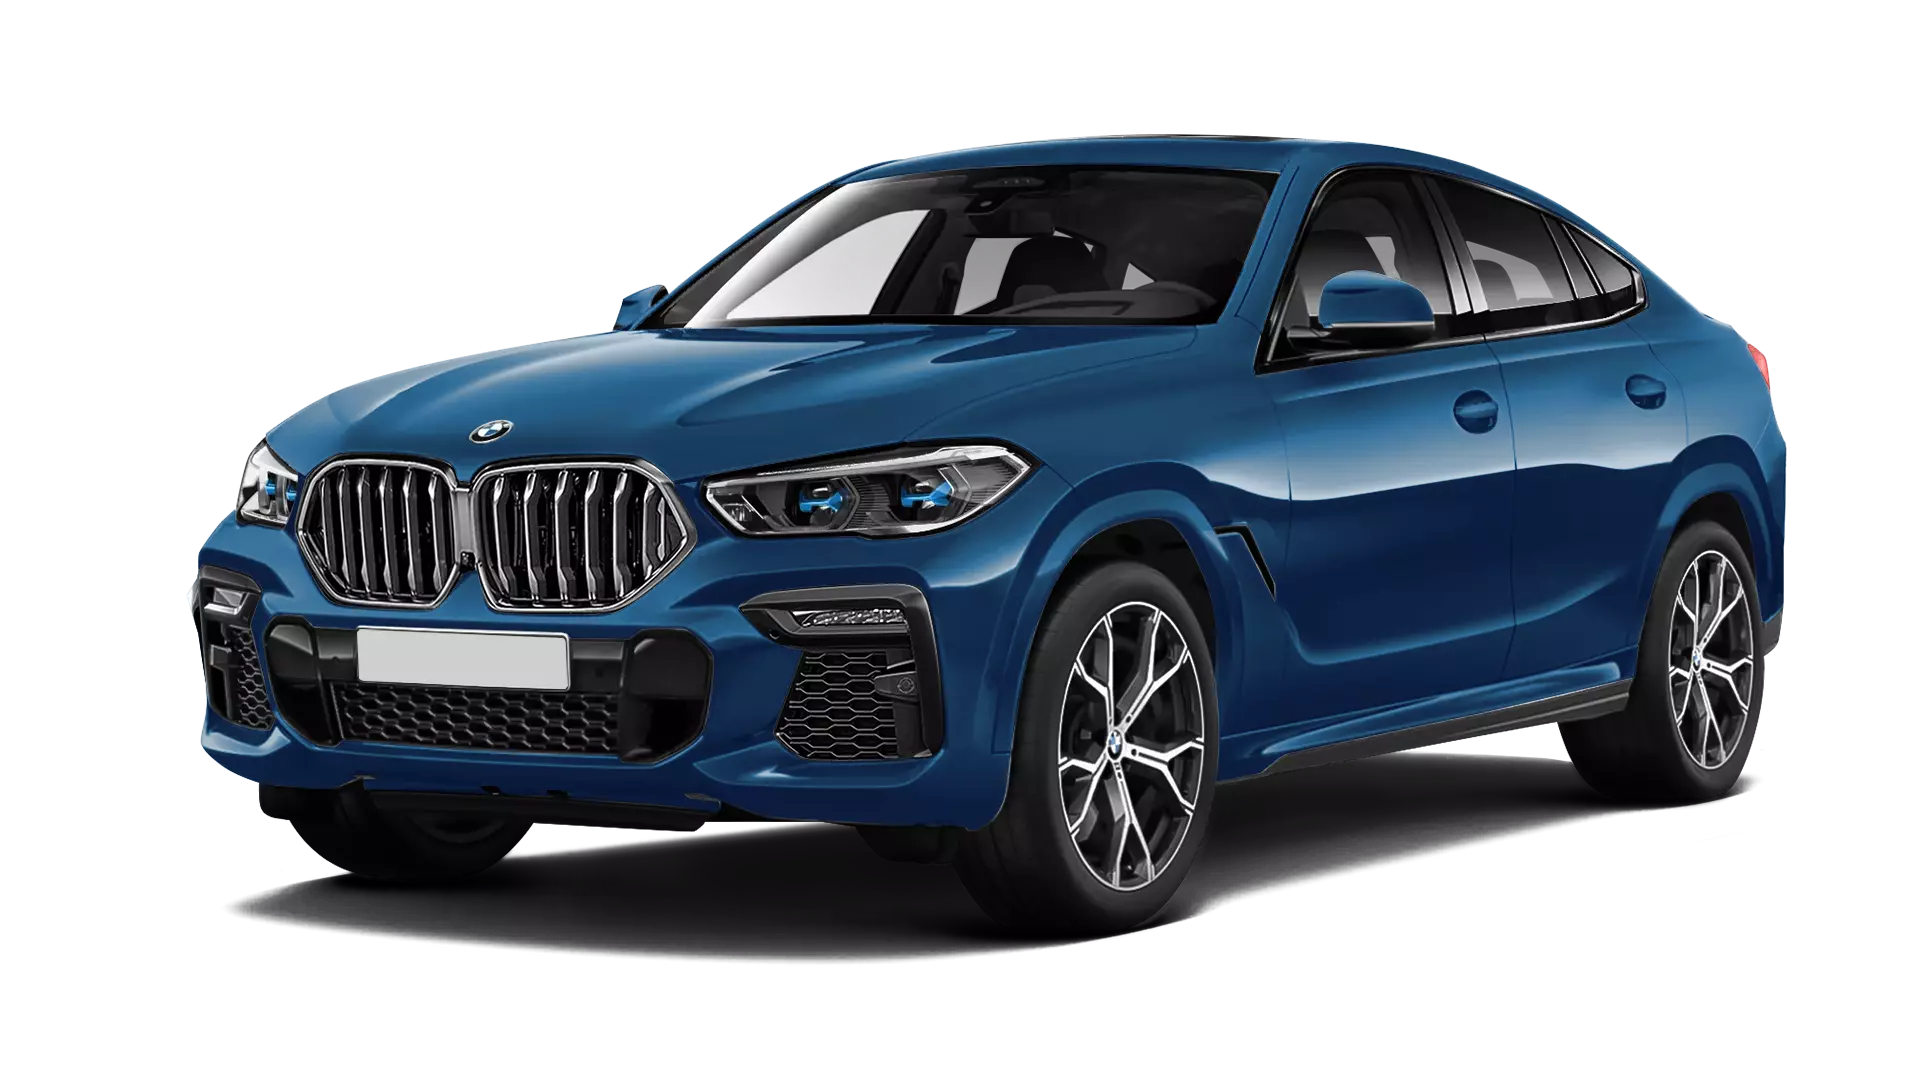 BMW X6 G06 serienmäßige Frontansicht in Phytonic Blau Farbe